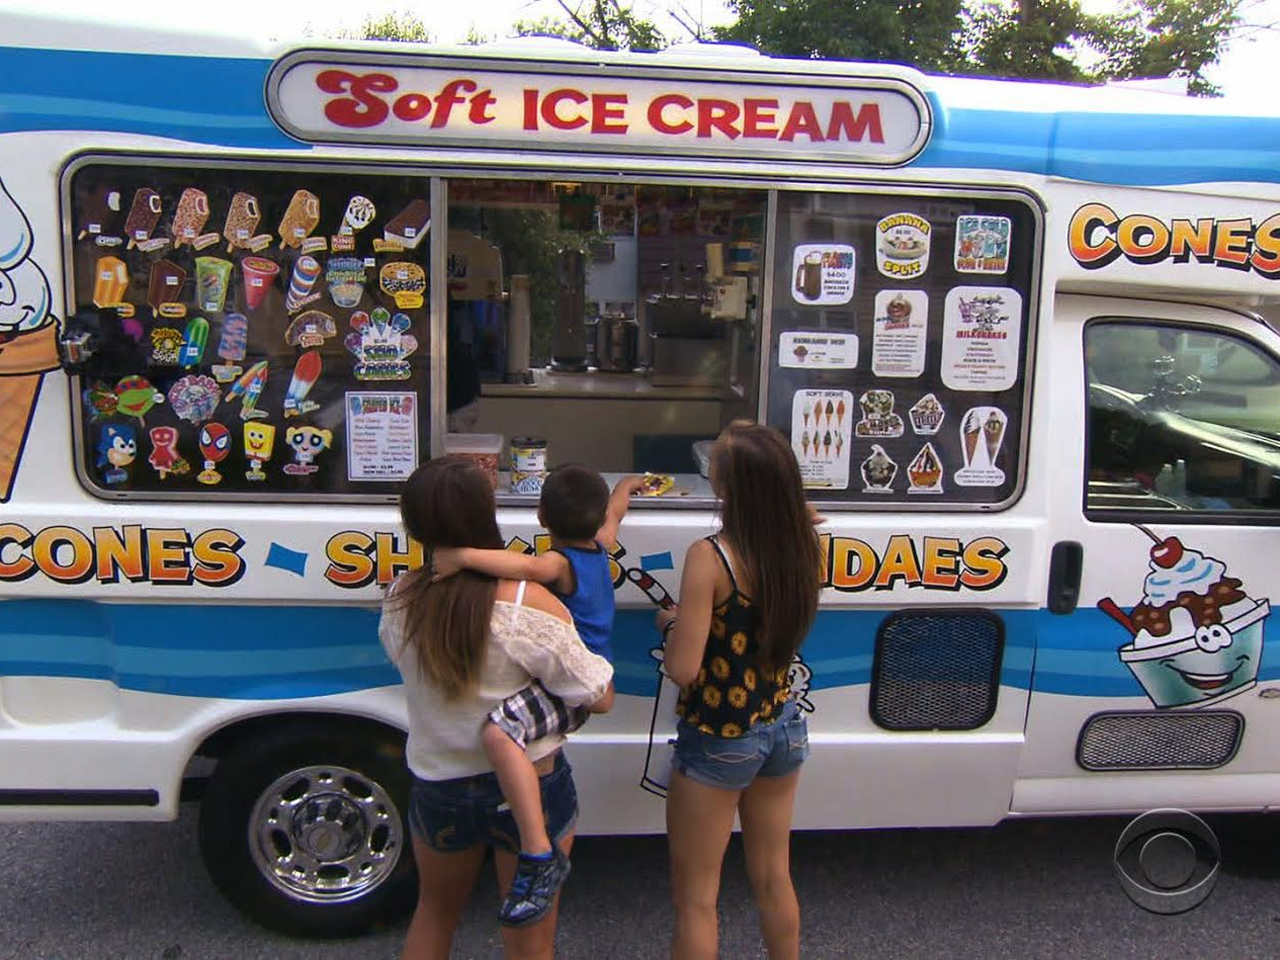 We all scream for the ice cream truck - CBS News